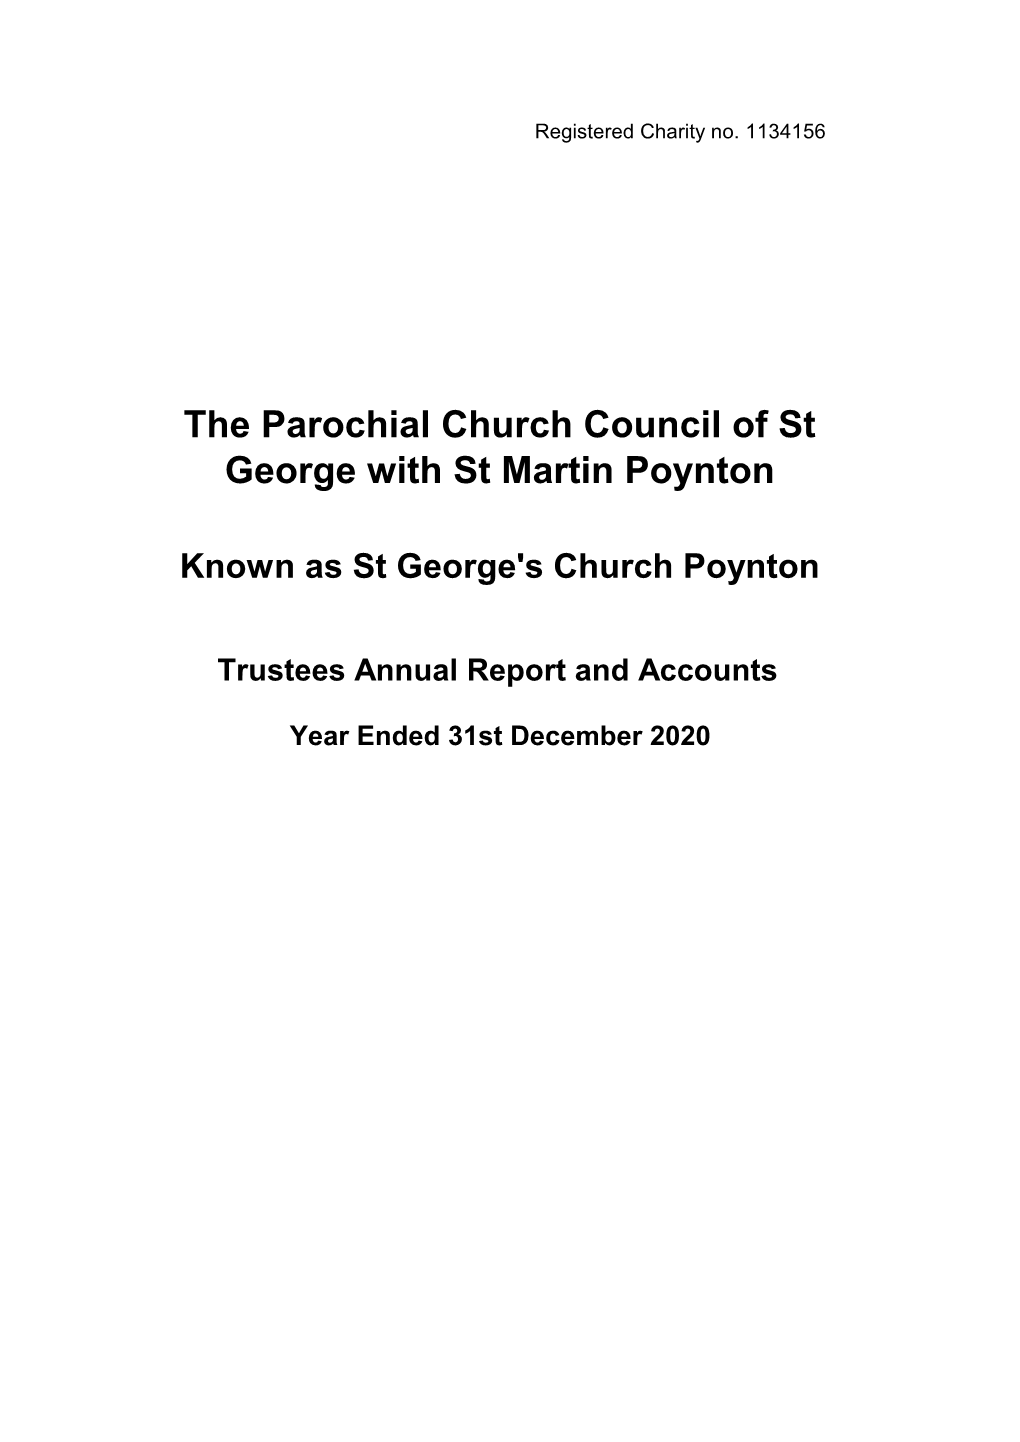 The Parochial Church Council of St George with St Martin Poynton